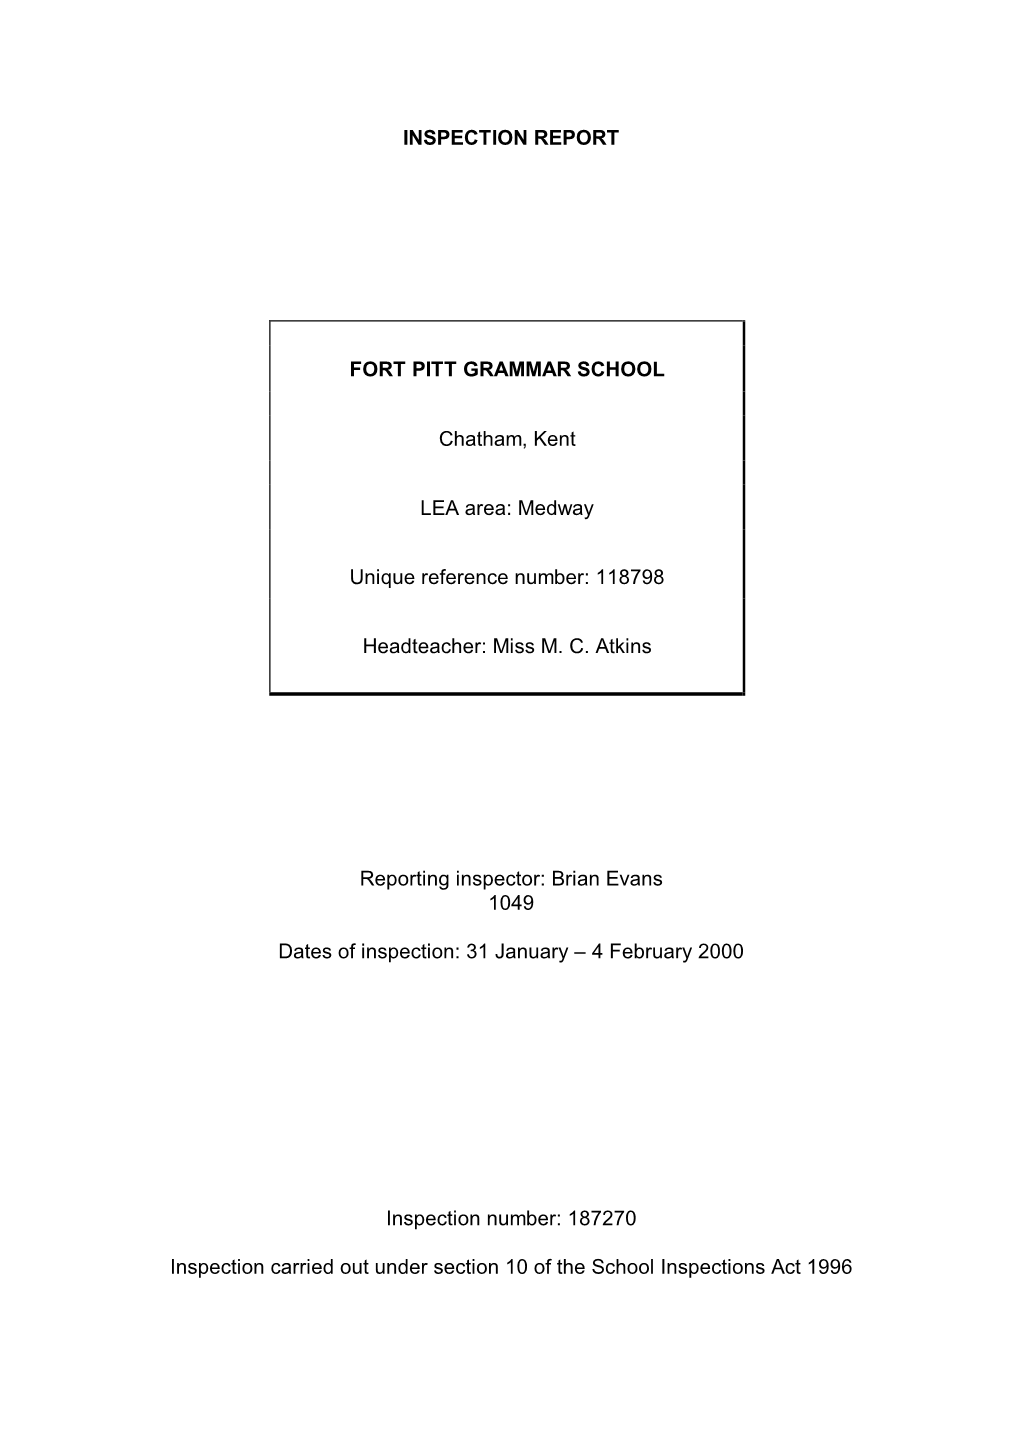 INSPECTION REPORT FORT PITT GRAMMAR SCHOOL Chatham